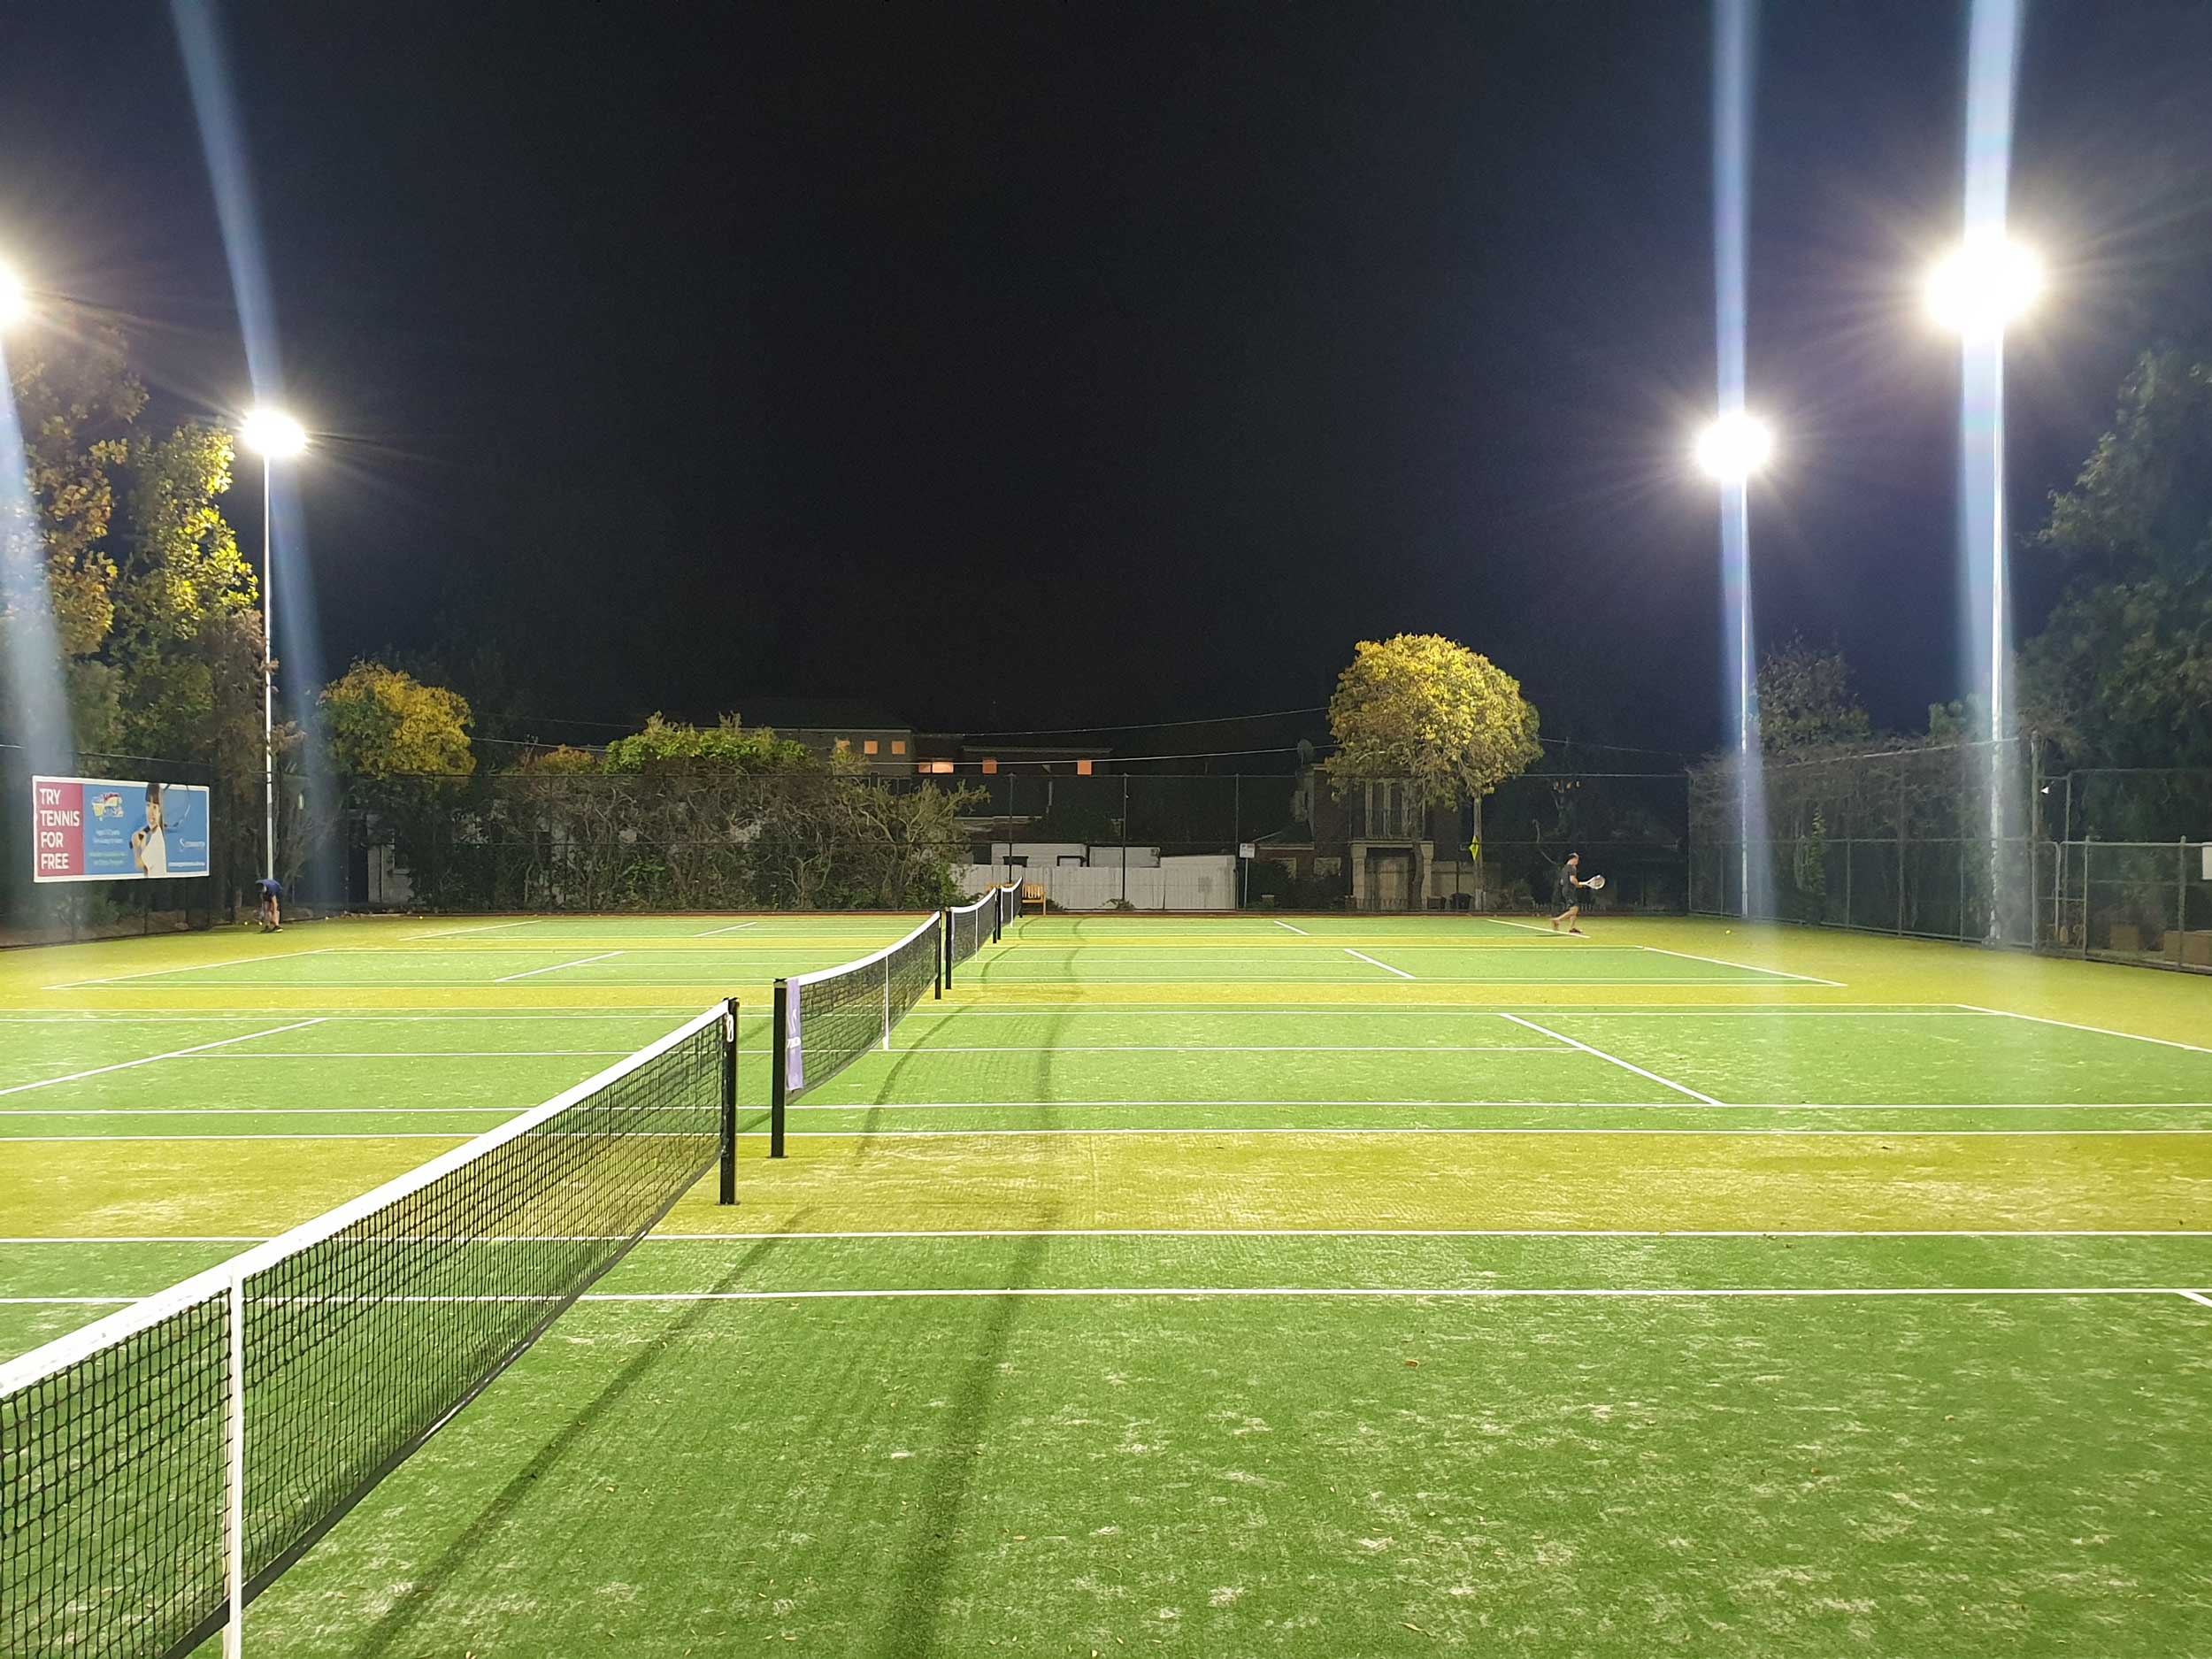 Malvern teniss court outdoor LED light